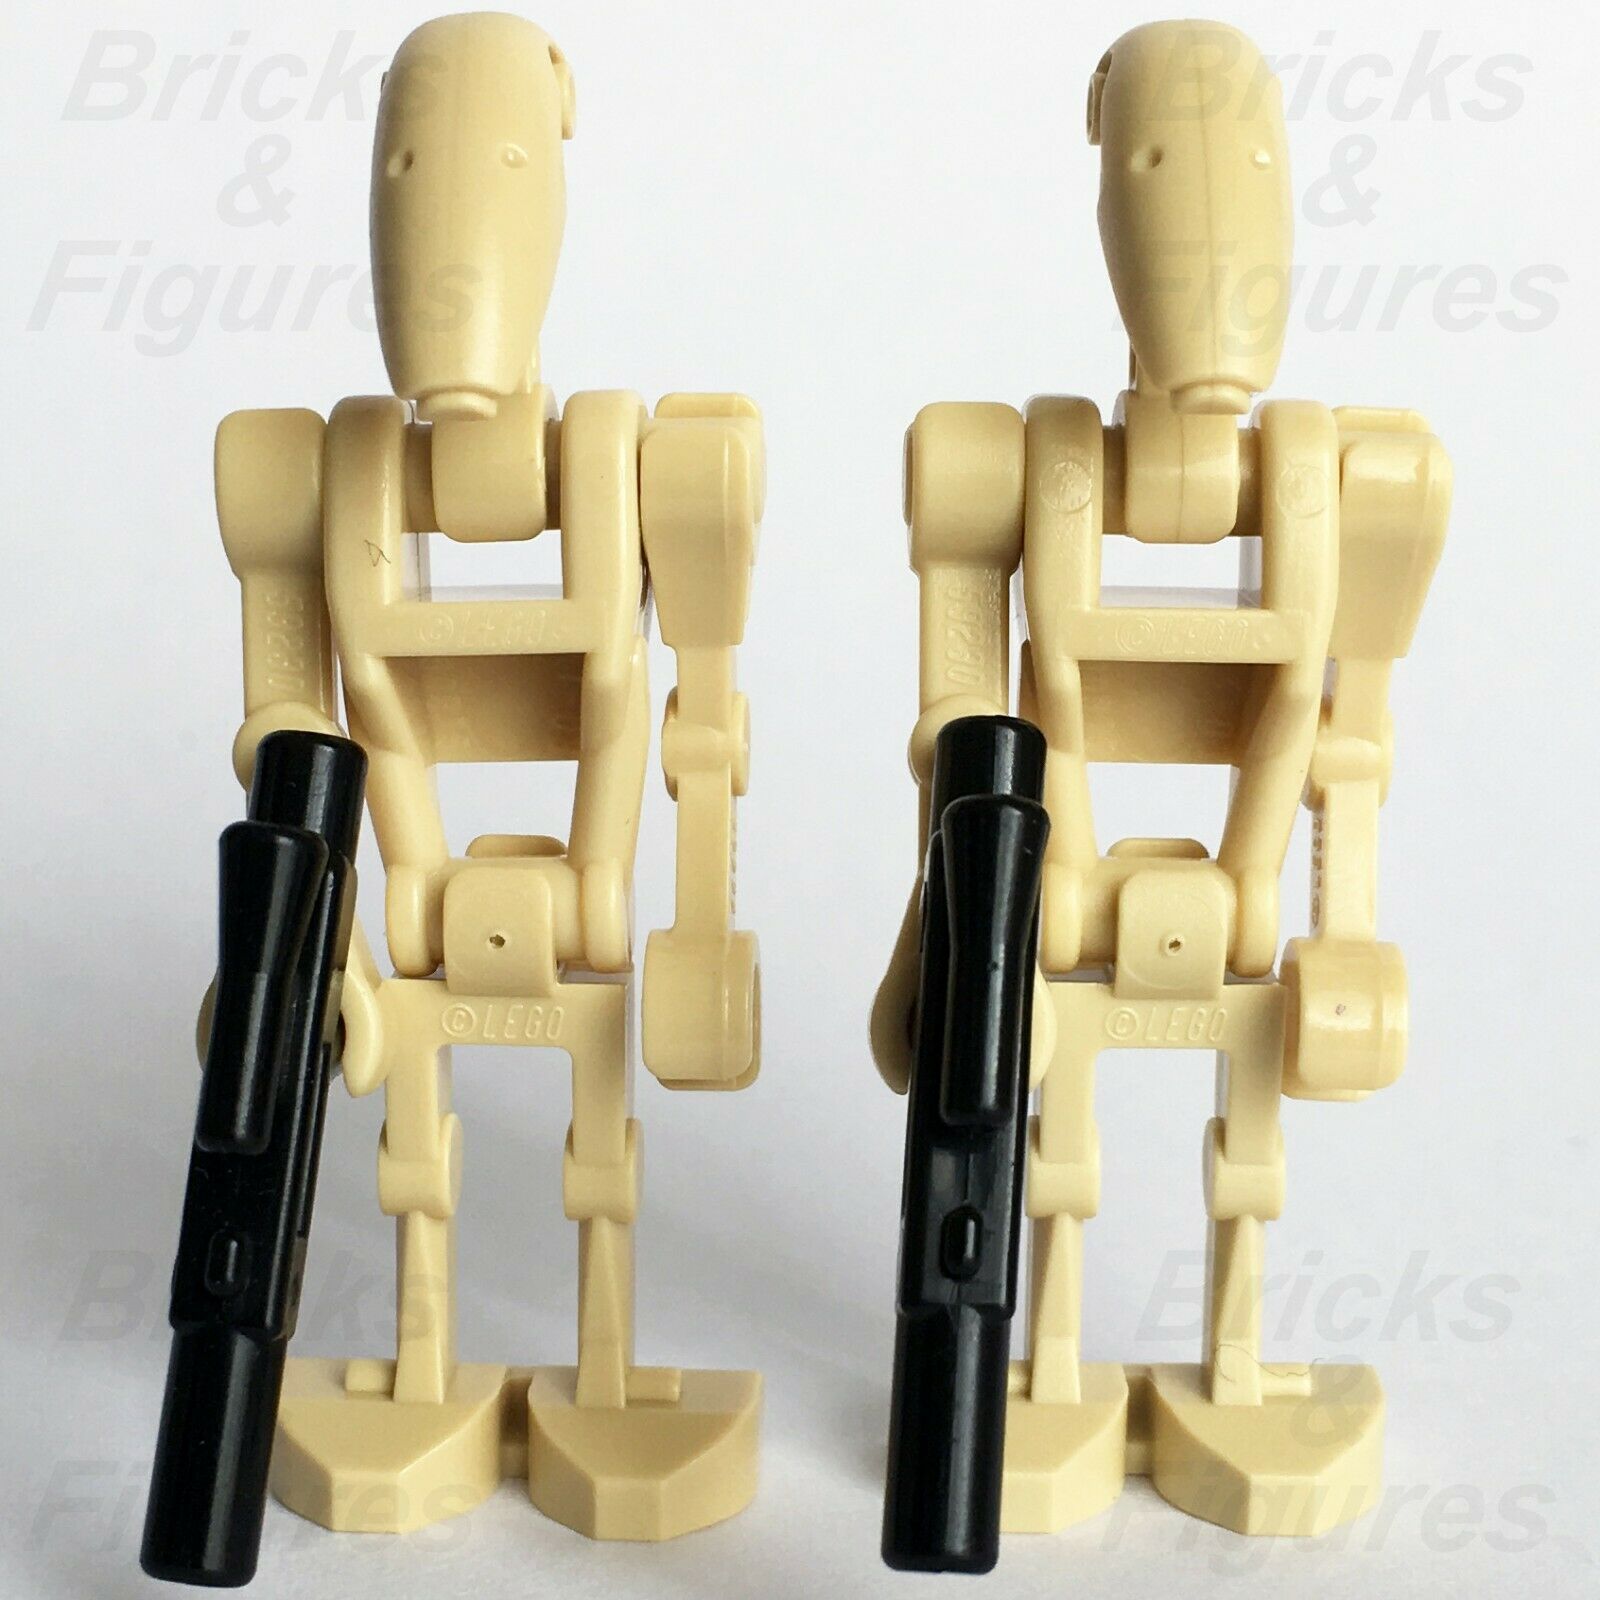 Star Wars LEGO 2 x Battle Droid Minifigures 75043 75058 7662 7929 7670